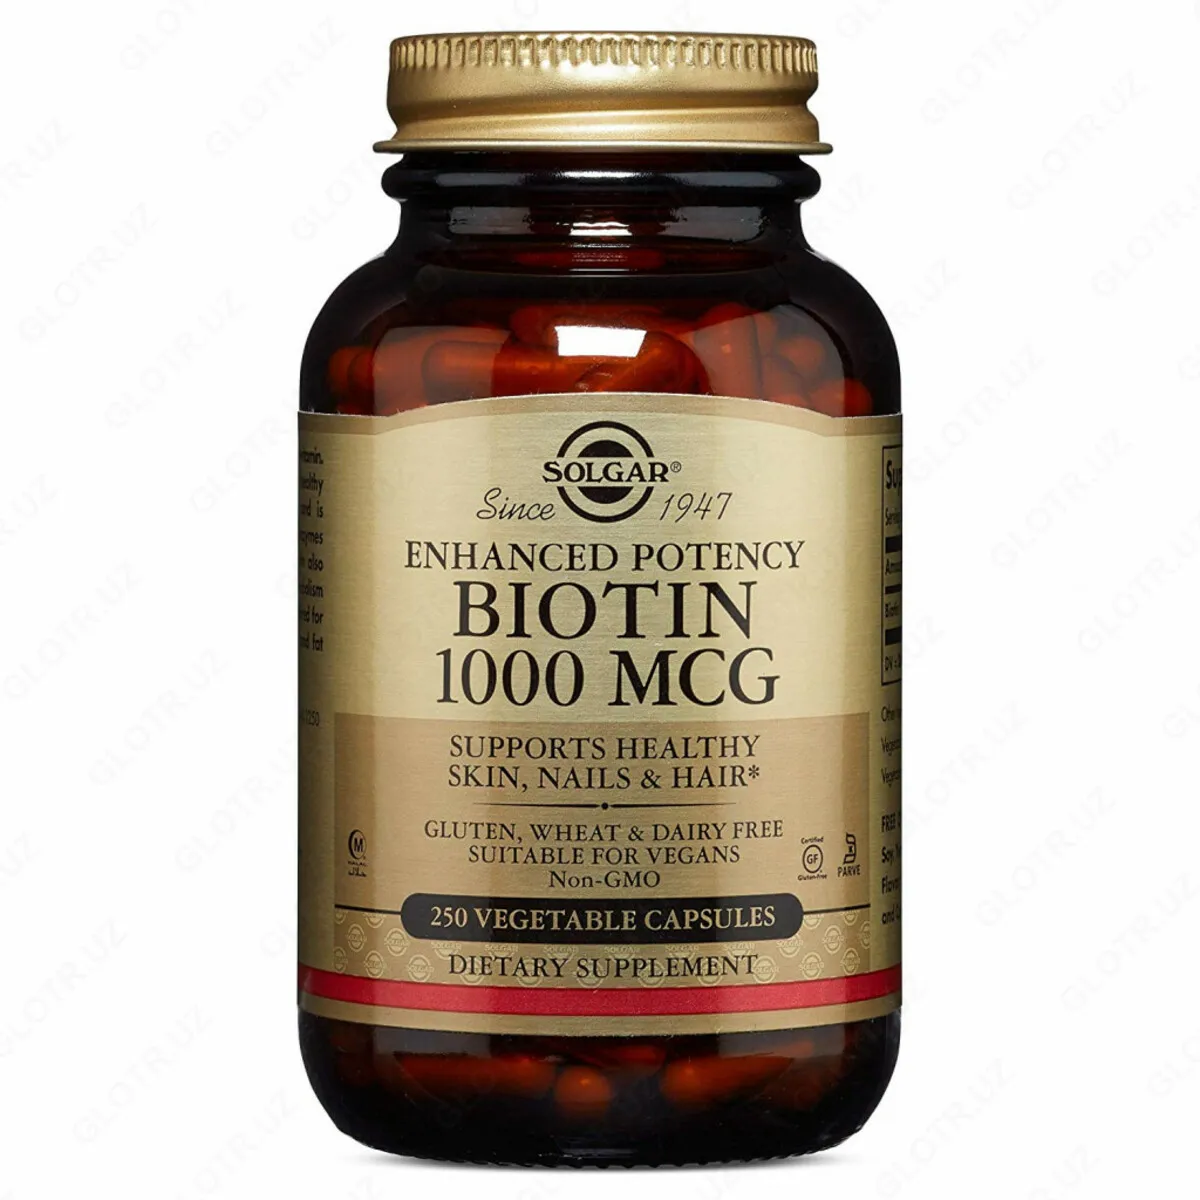 Таблетки биотина для здоровой кожи и волос Solgar Biotin 1000mg (250 шт)#1